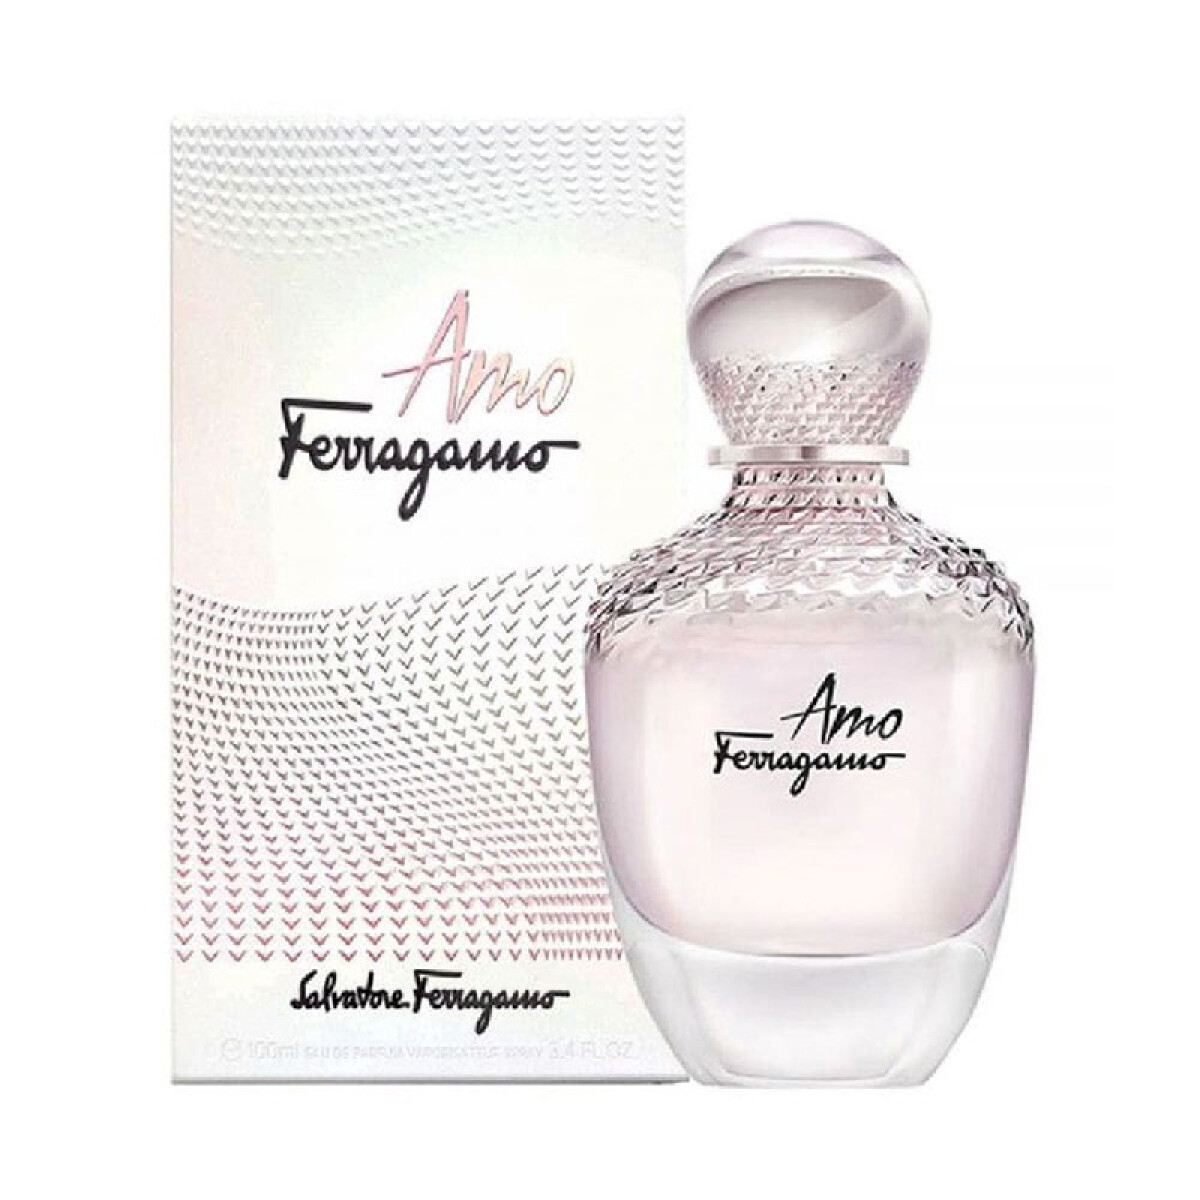 Amo Ferragamo eau de parfum 100 ml 